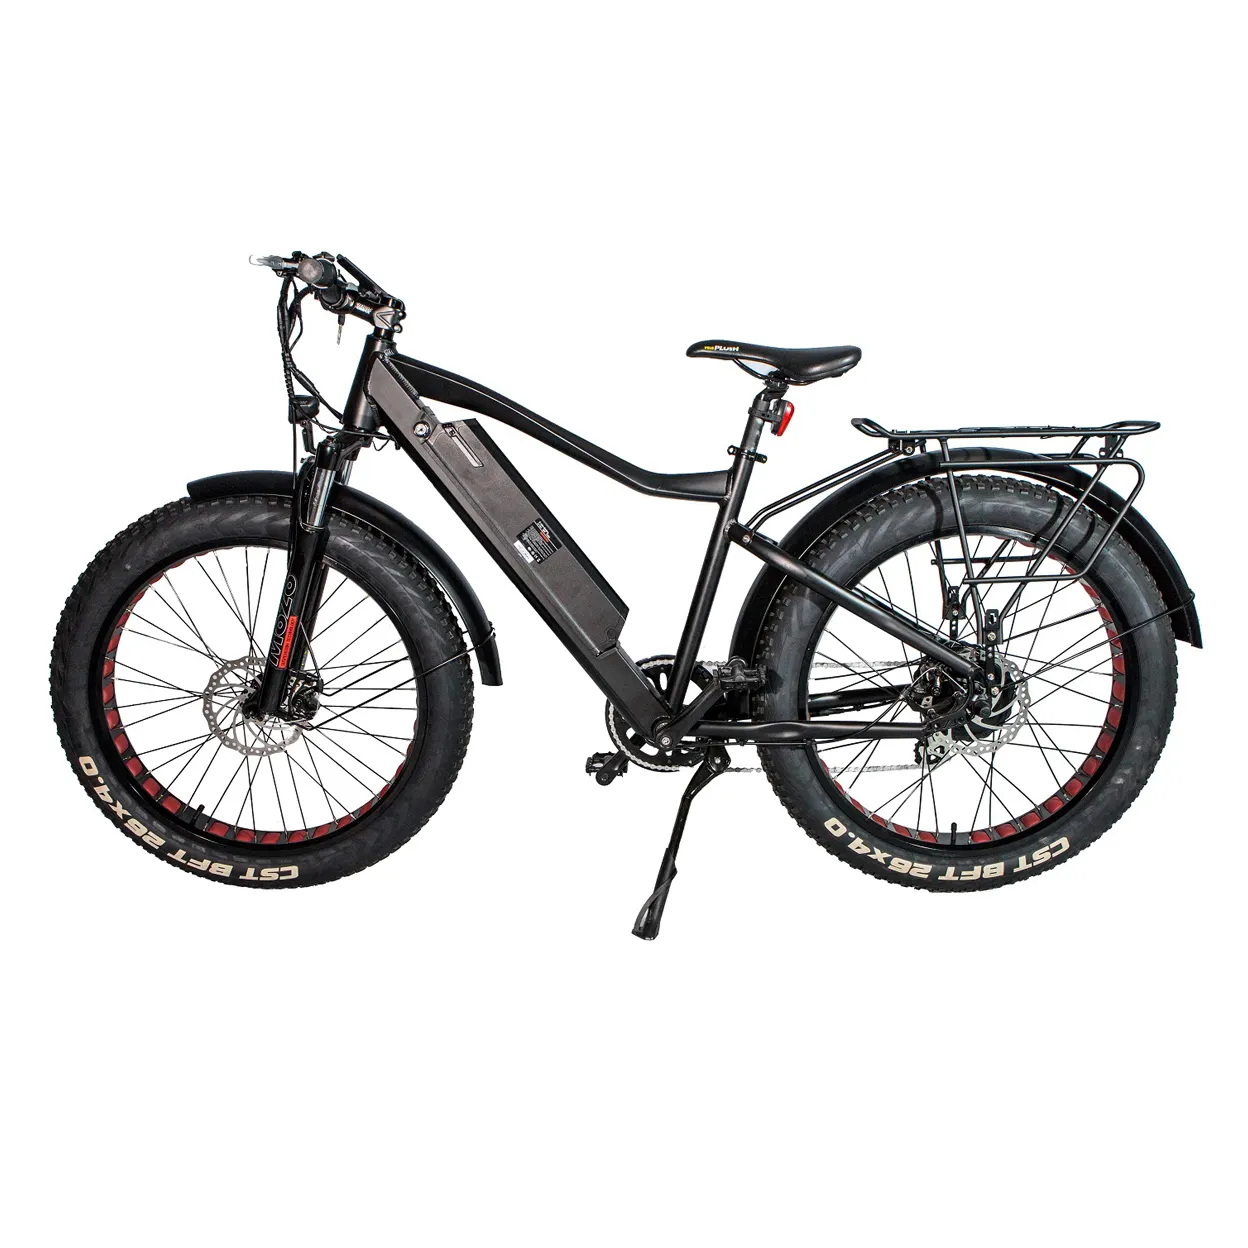 Greenpedel 48v 500w rear wheel motor lithium battery 26*4.0 inch fat tire electric bike bicicleta electrica motos